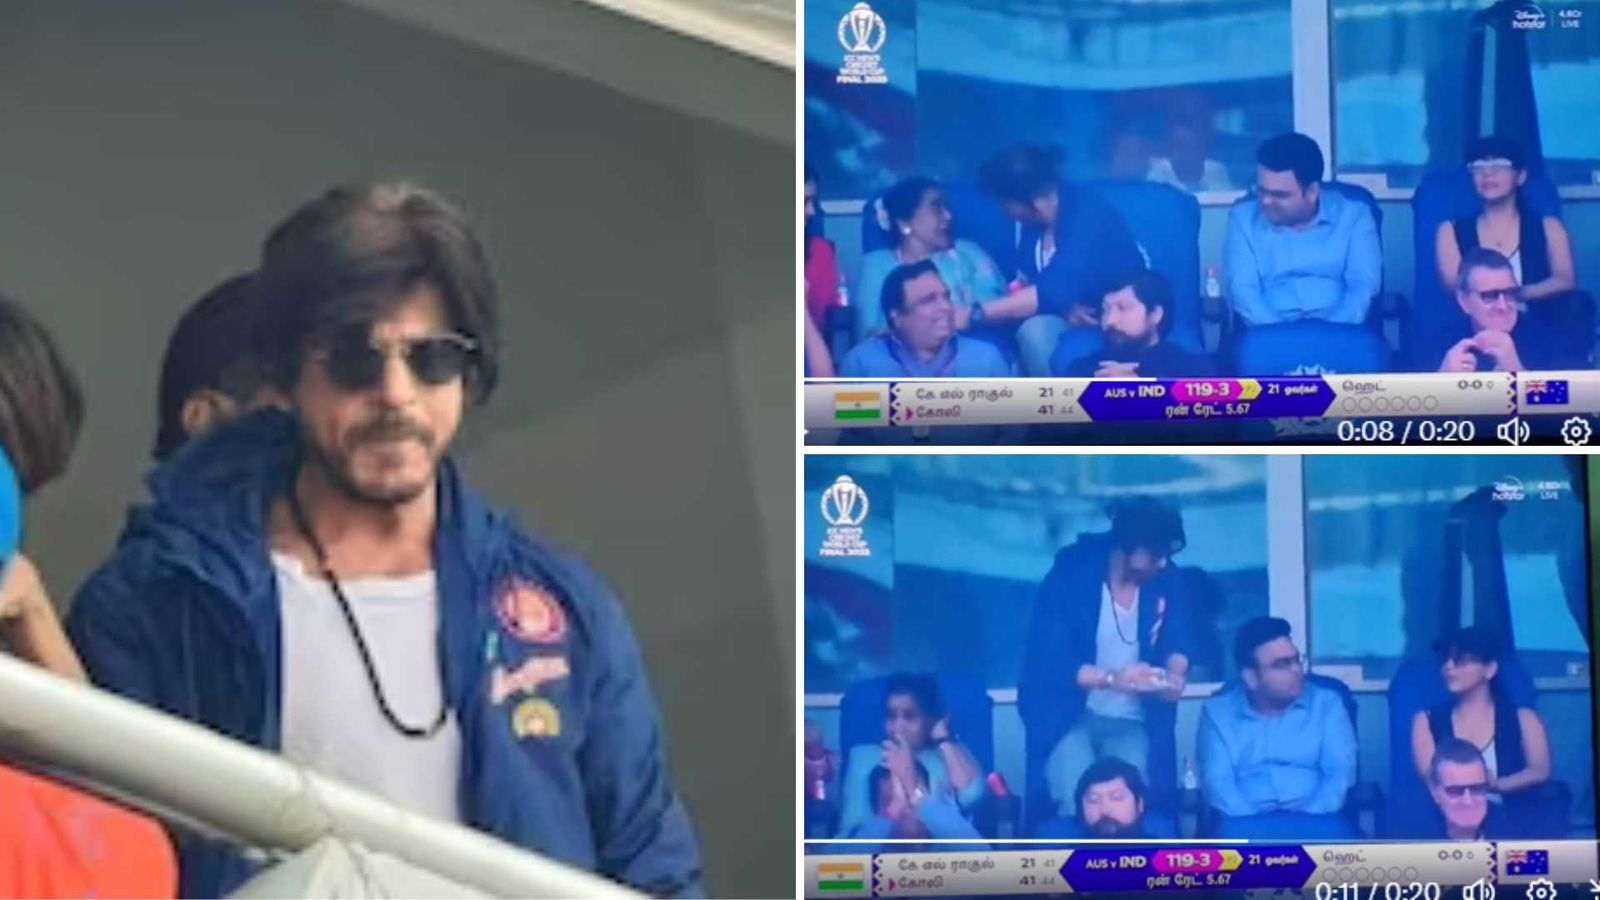 Ind Vs Aus final: मैच के दौरान शाहरुख खान ने उठाई आशा भोसले की जूठी कप प्लेट, लोग बोले- सच्चा जेंटलमैन